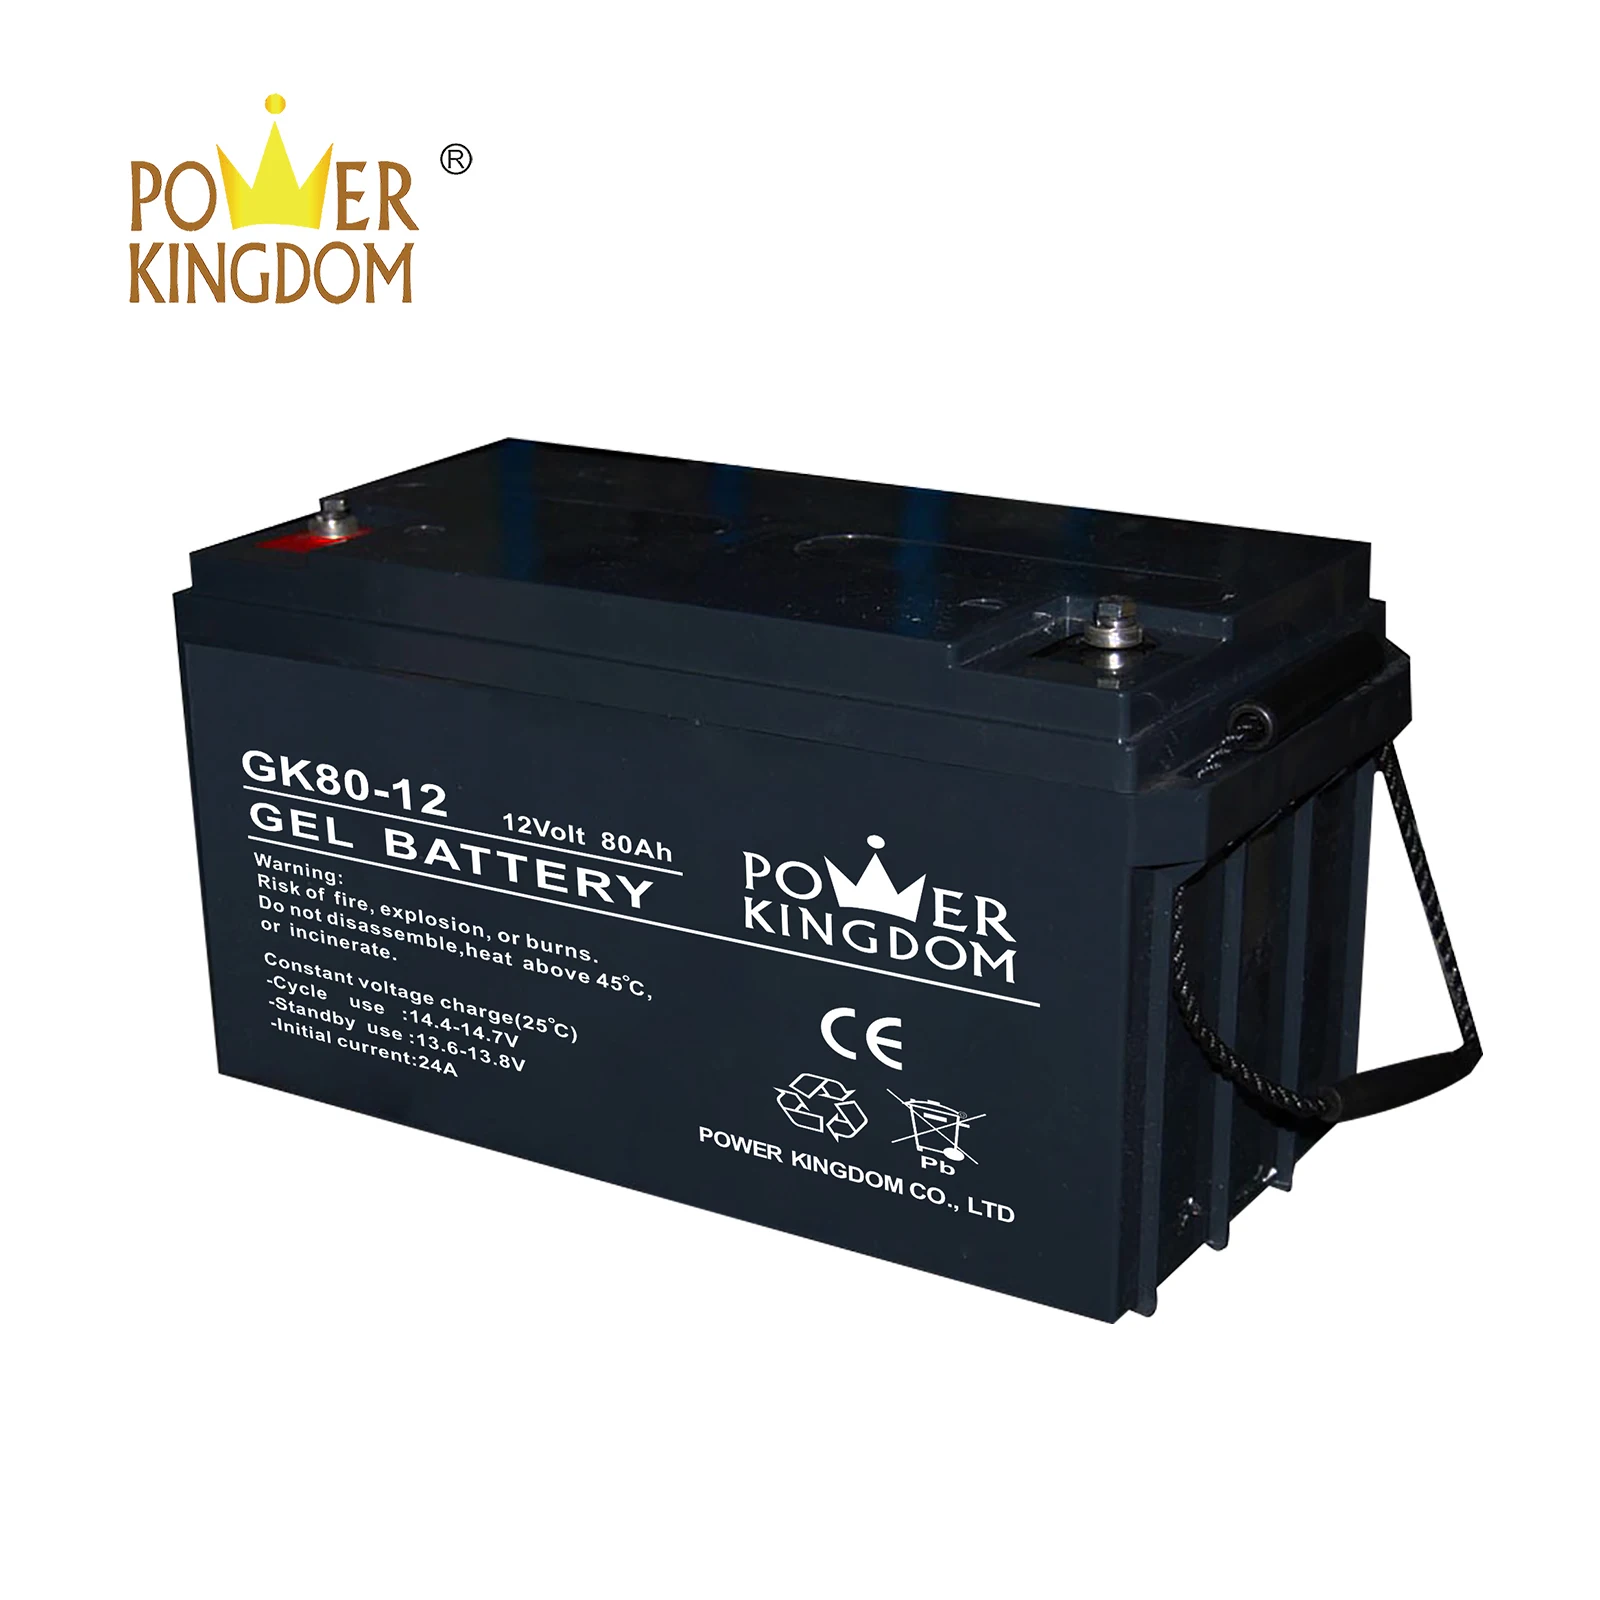 Power Kingdom High-quality pb acid battery company wind power system